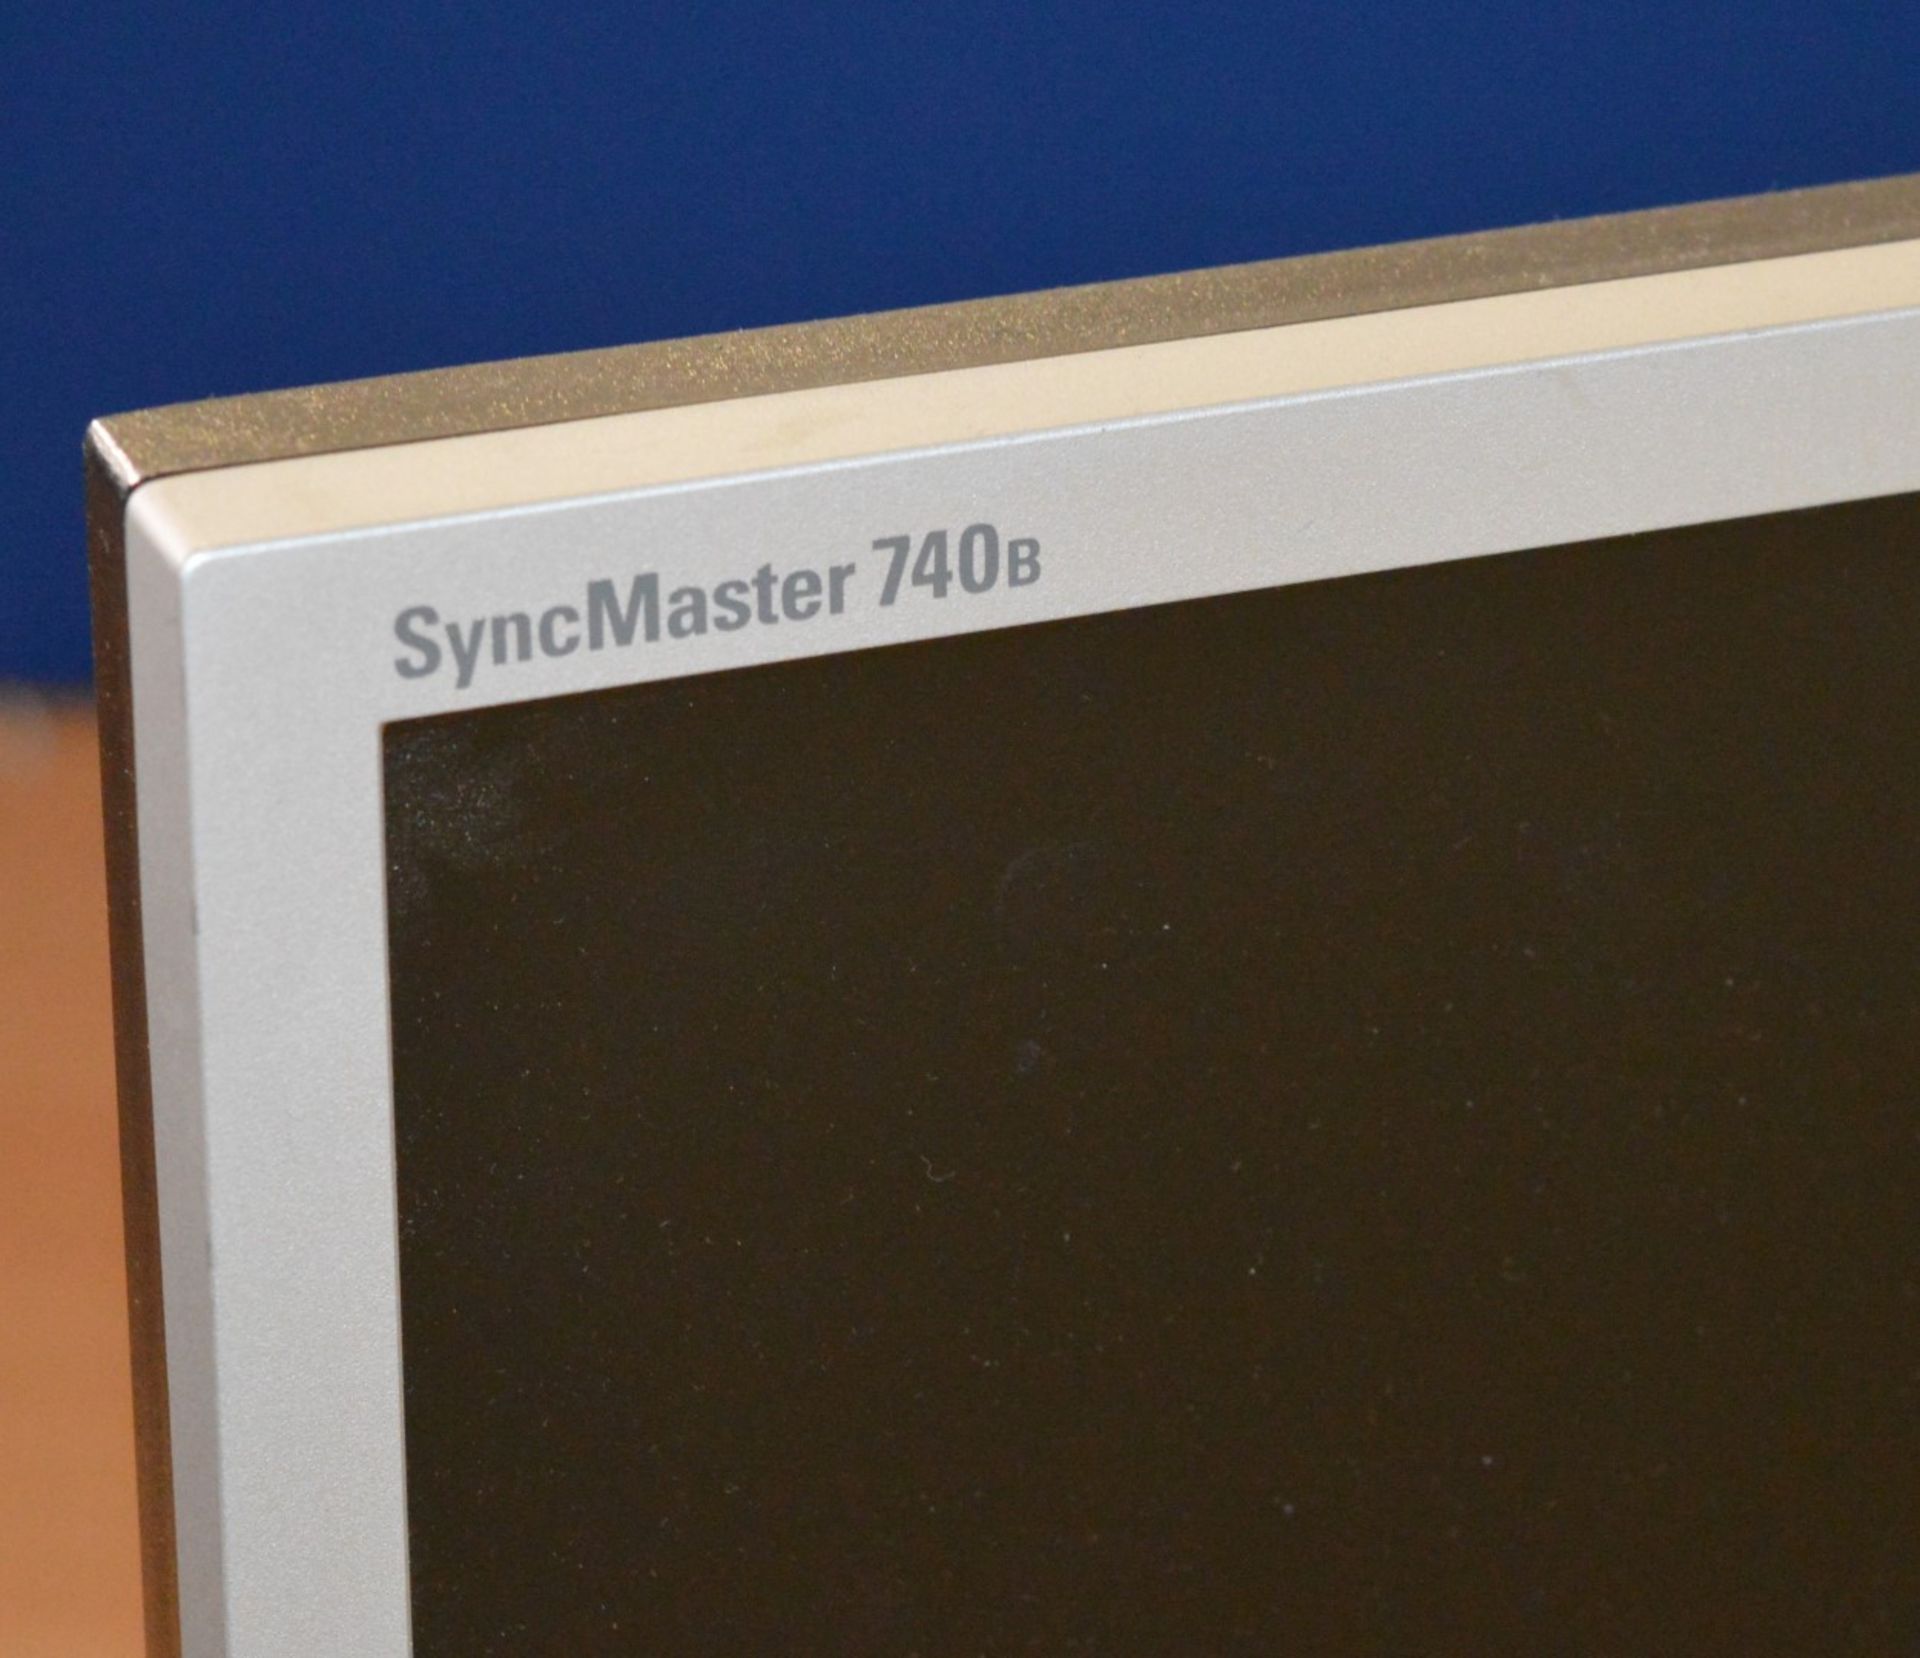 1 x Samsung Syncmaster 740B Flatscreen LCD Monitor - 17 Inch Screen Size - 1280 x 1024 Native - Image 2 of 6